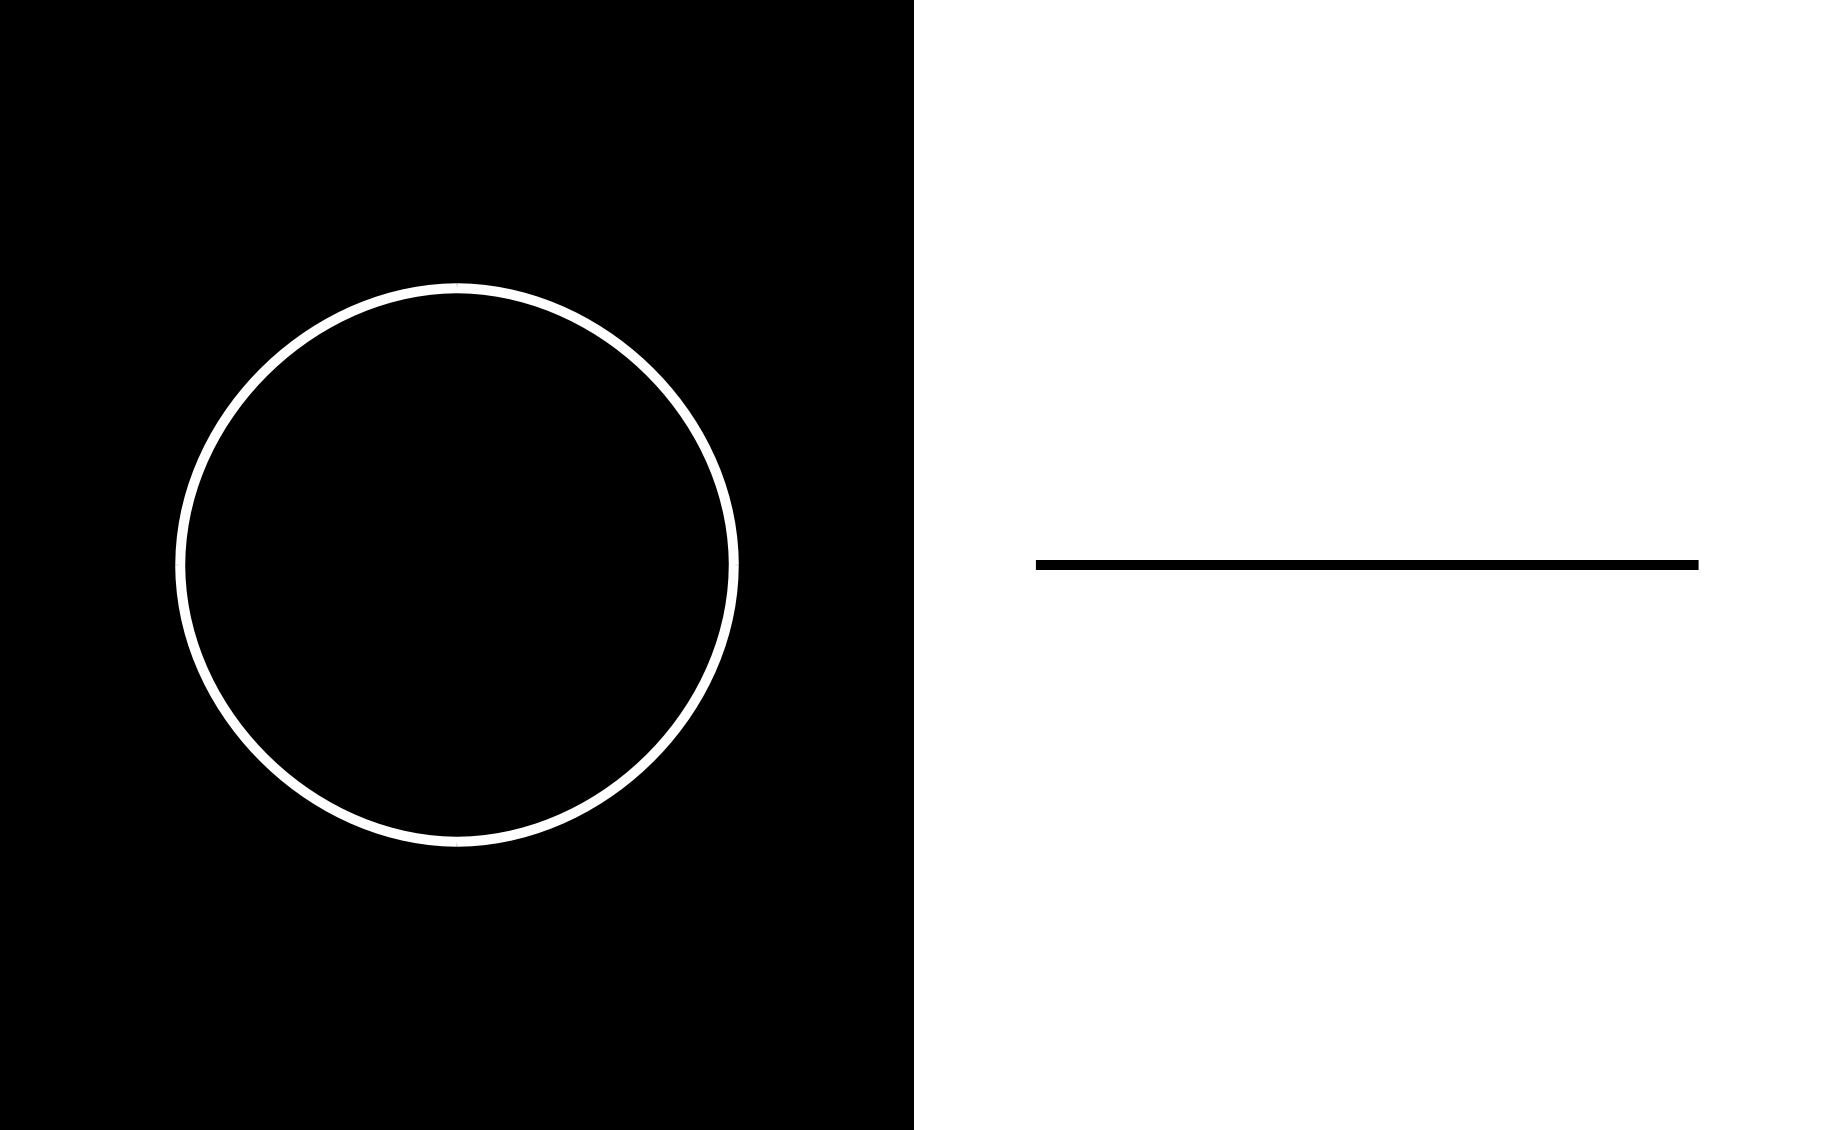 white circle, black horizontal line